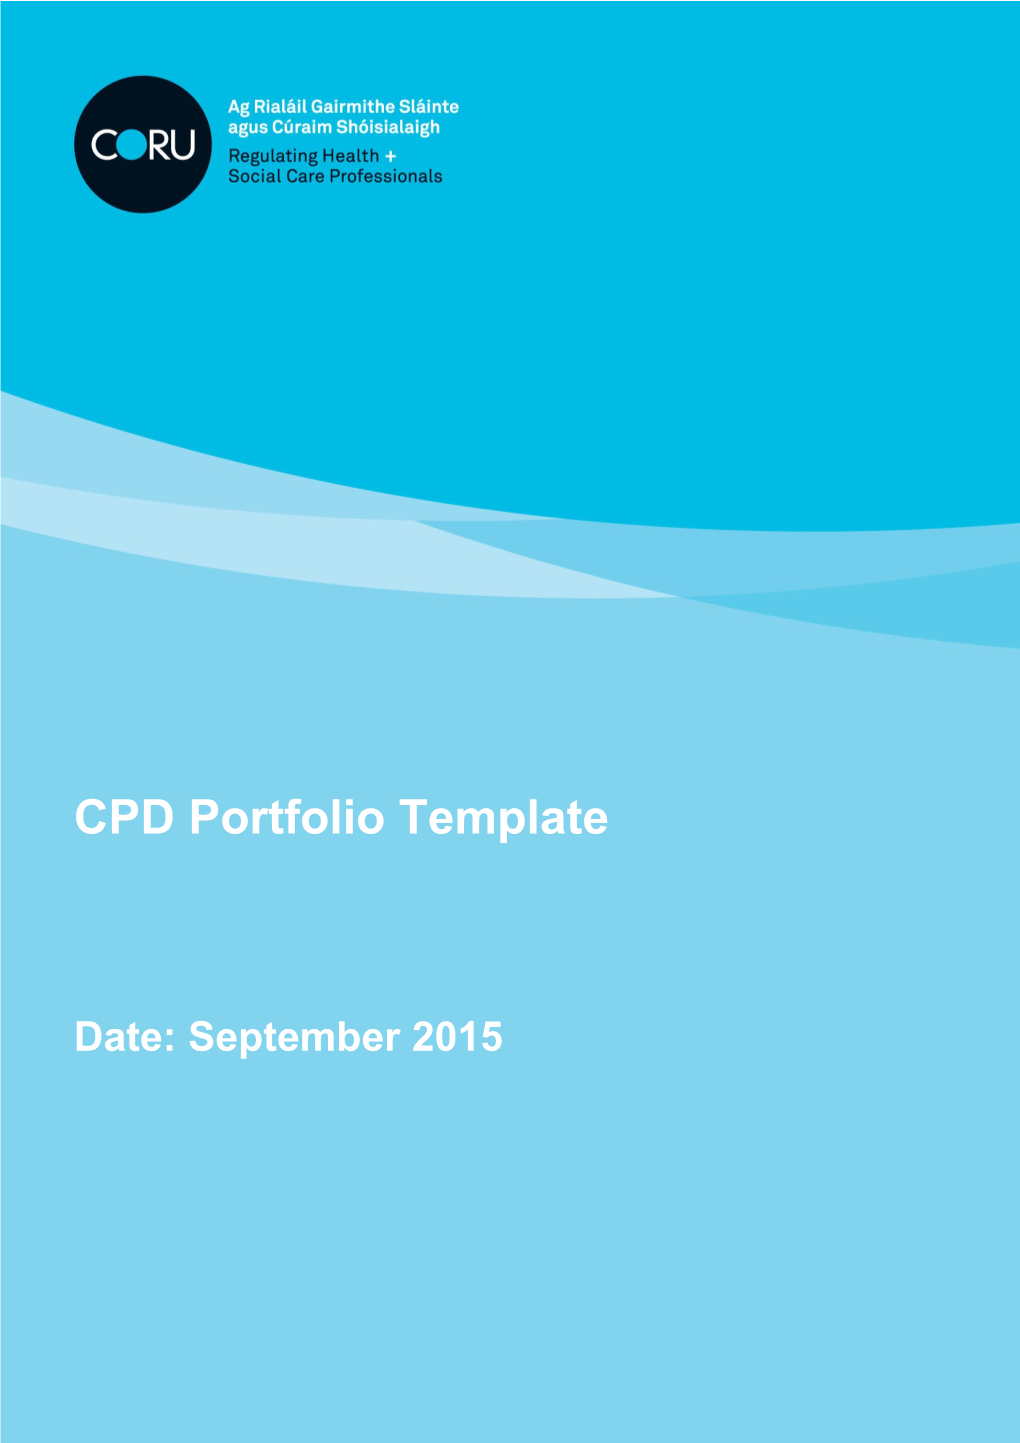 CPD Portfolio Template